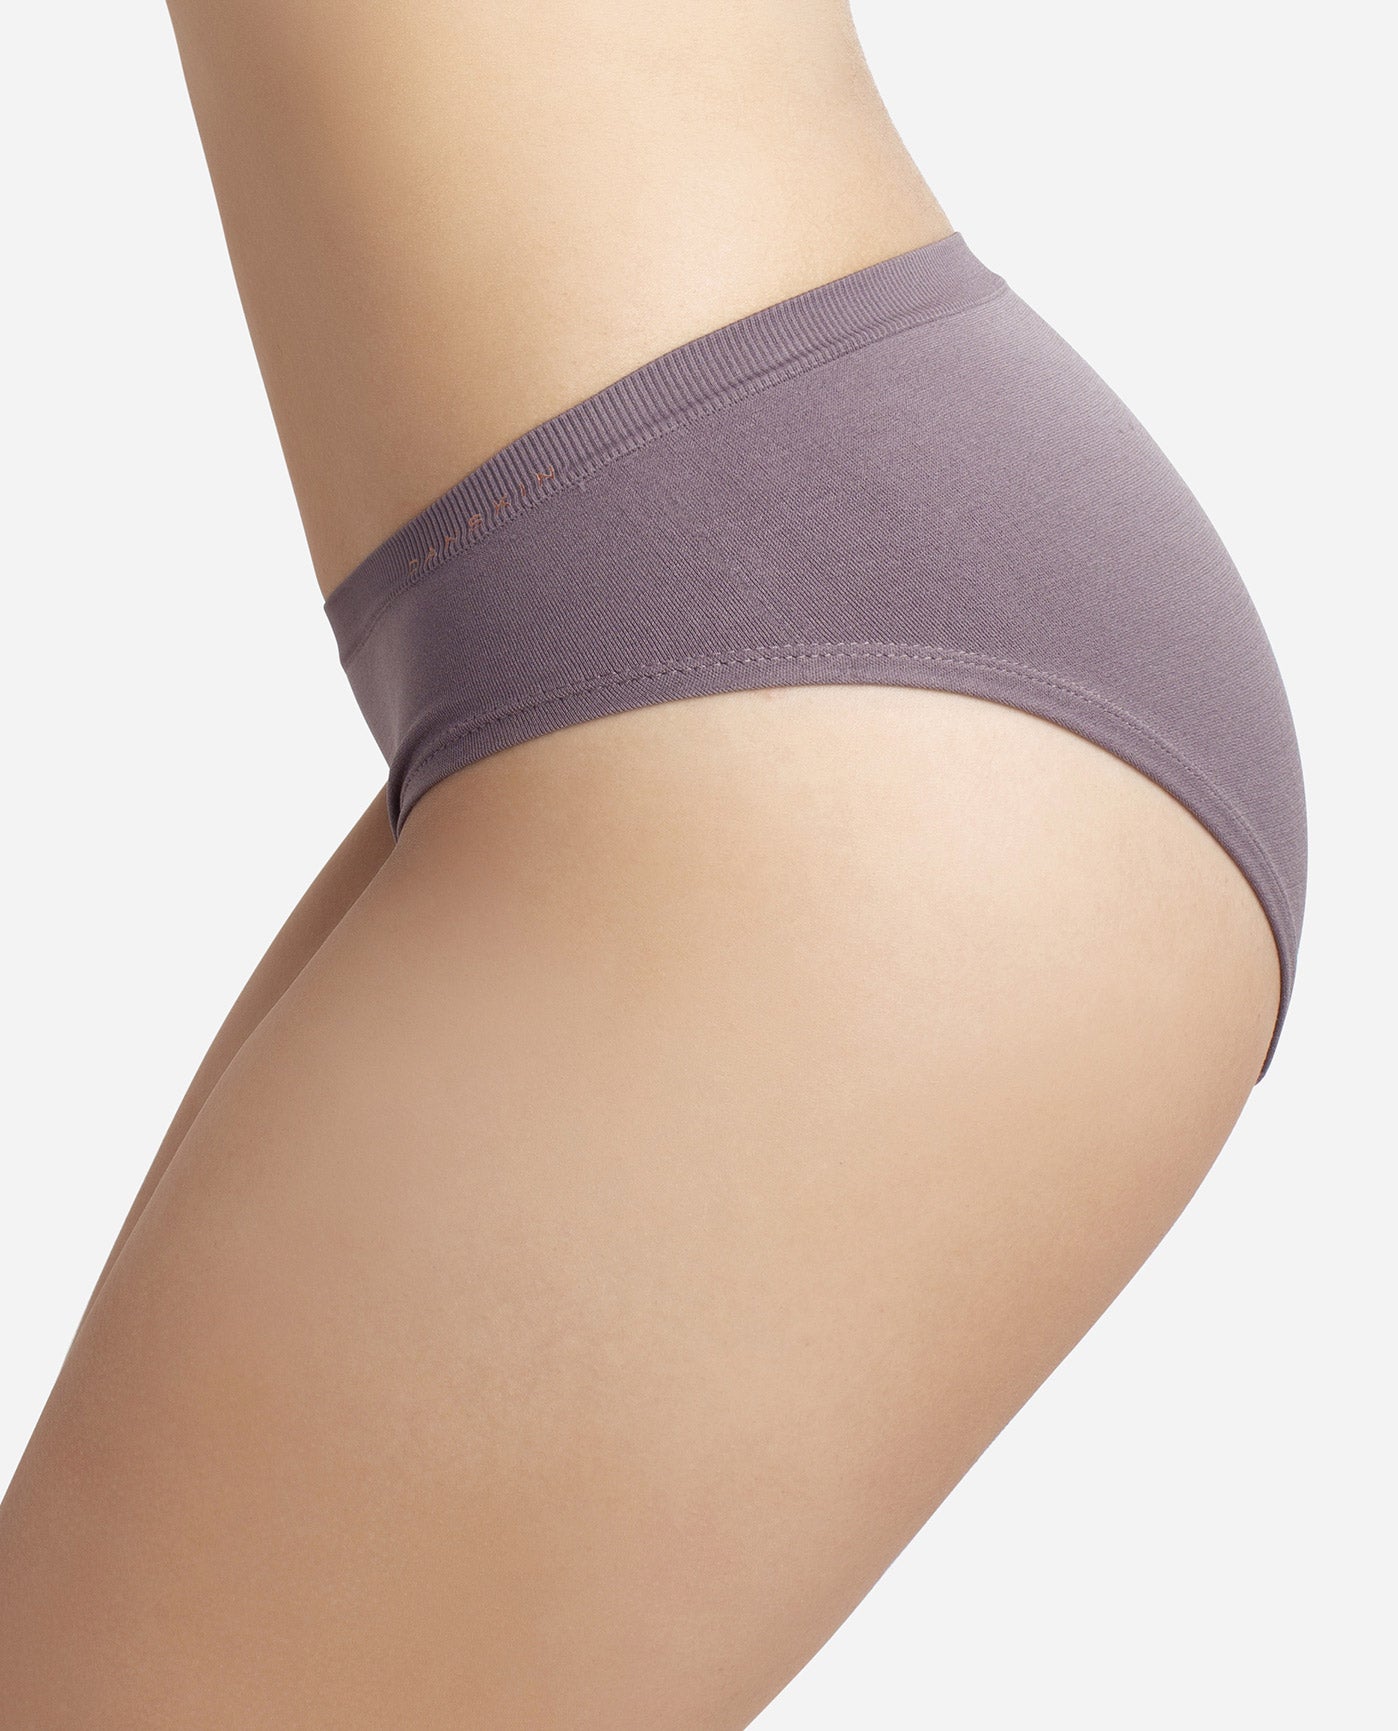 Danskin Rib Textured Seamless Panties - 5-Pack, Boyshorts - Save 71%